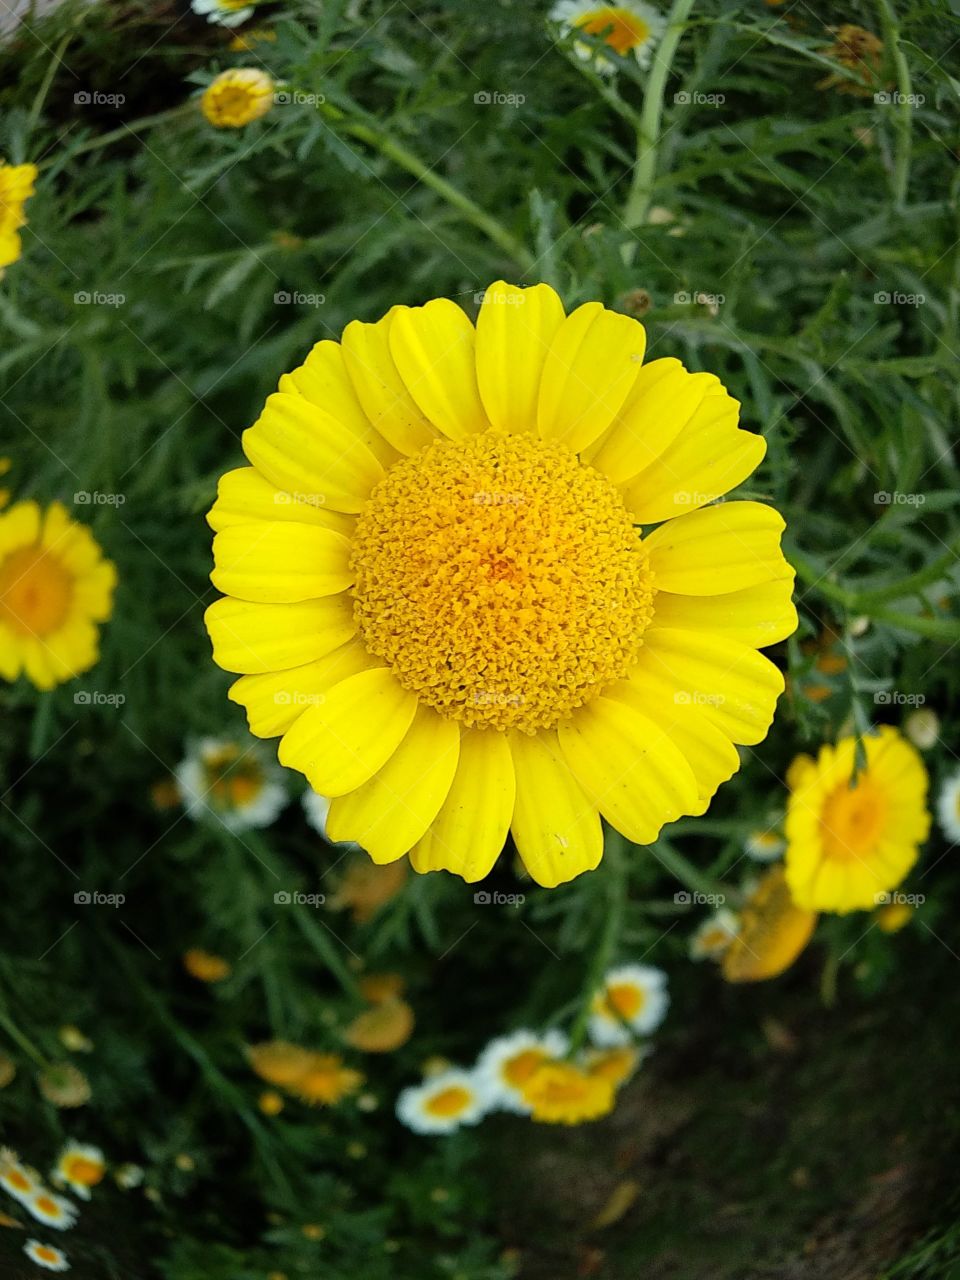 focus on yellow flowers